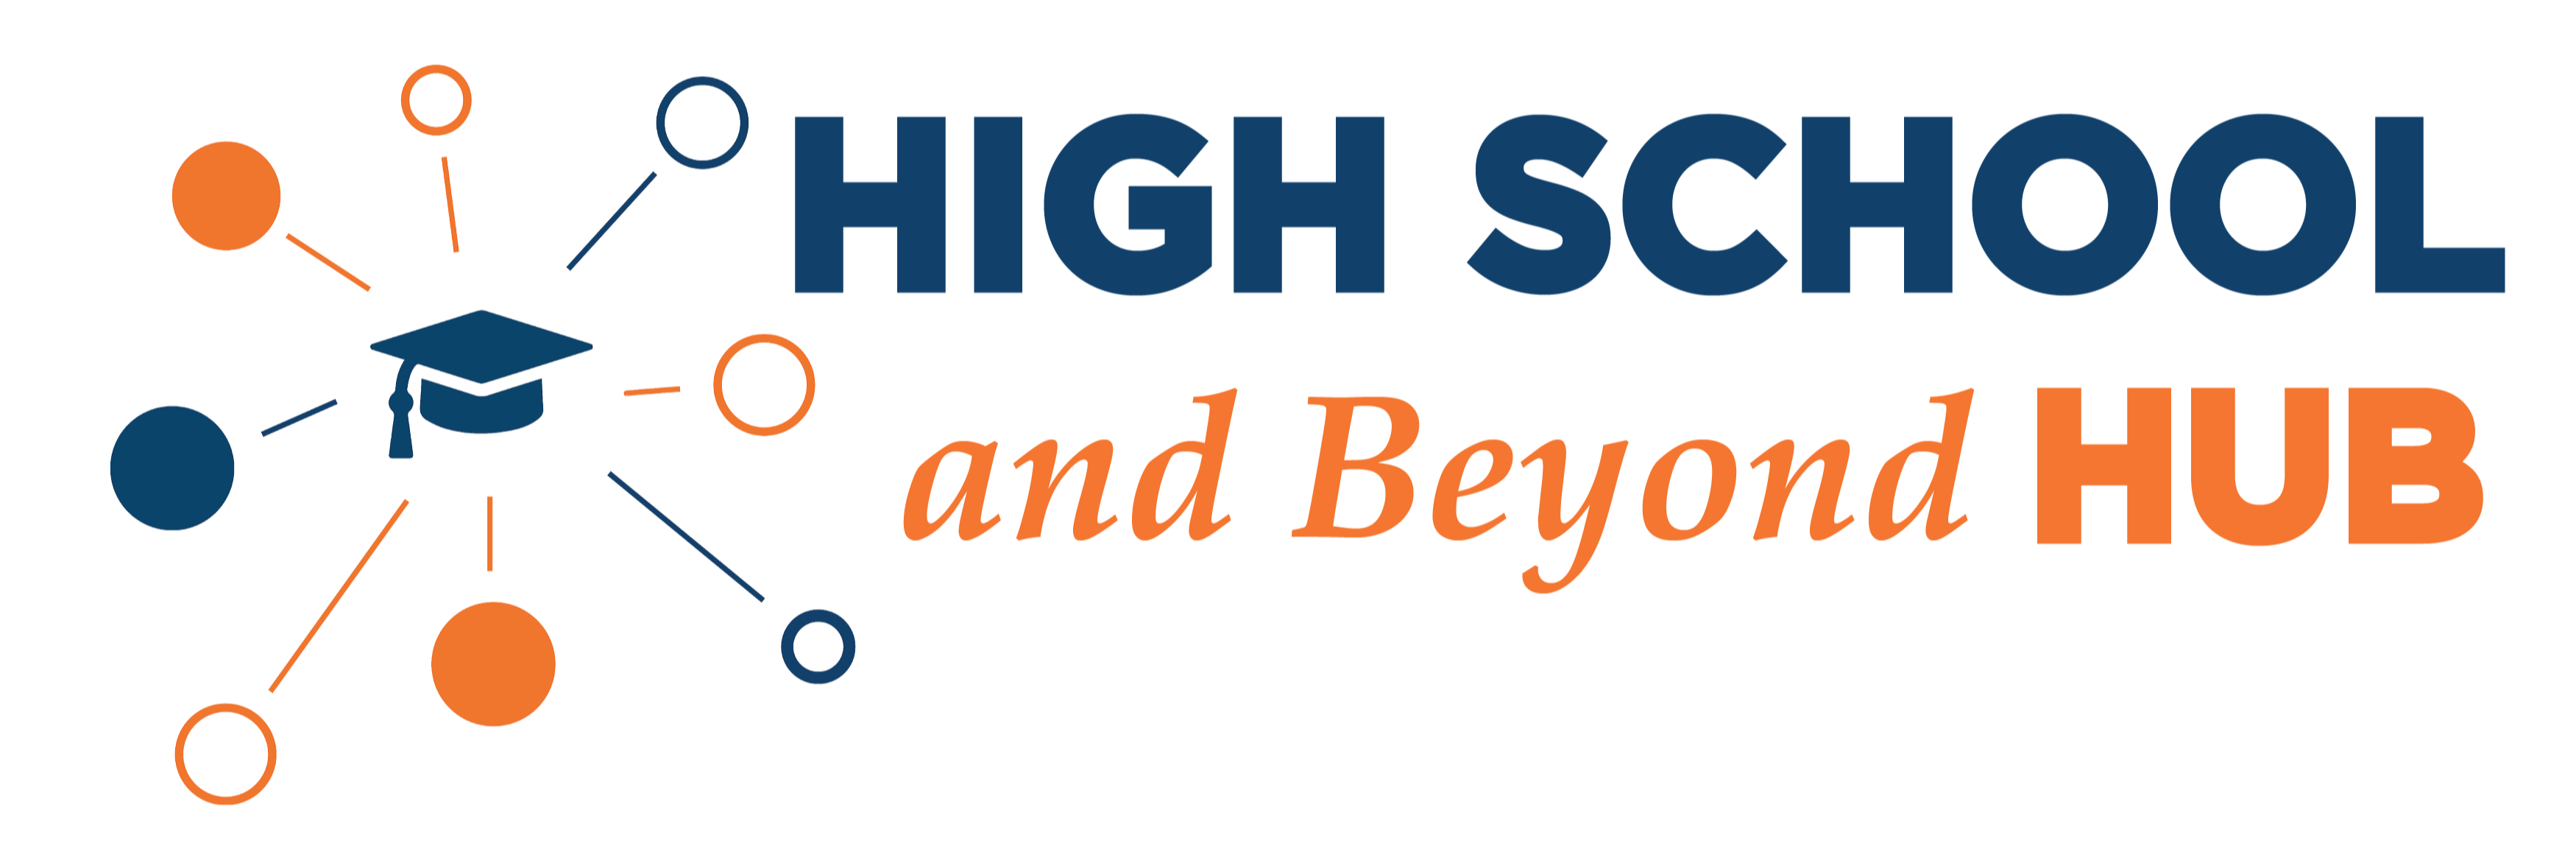 High School and Beyond